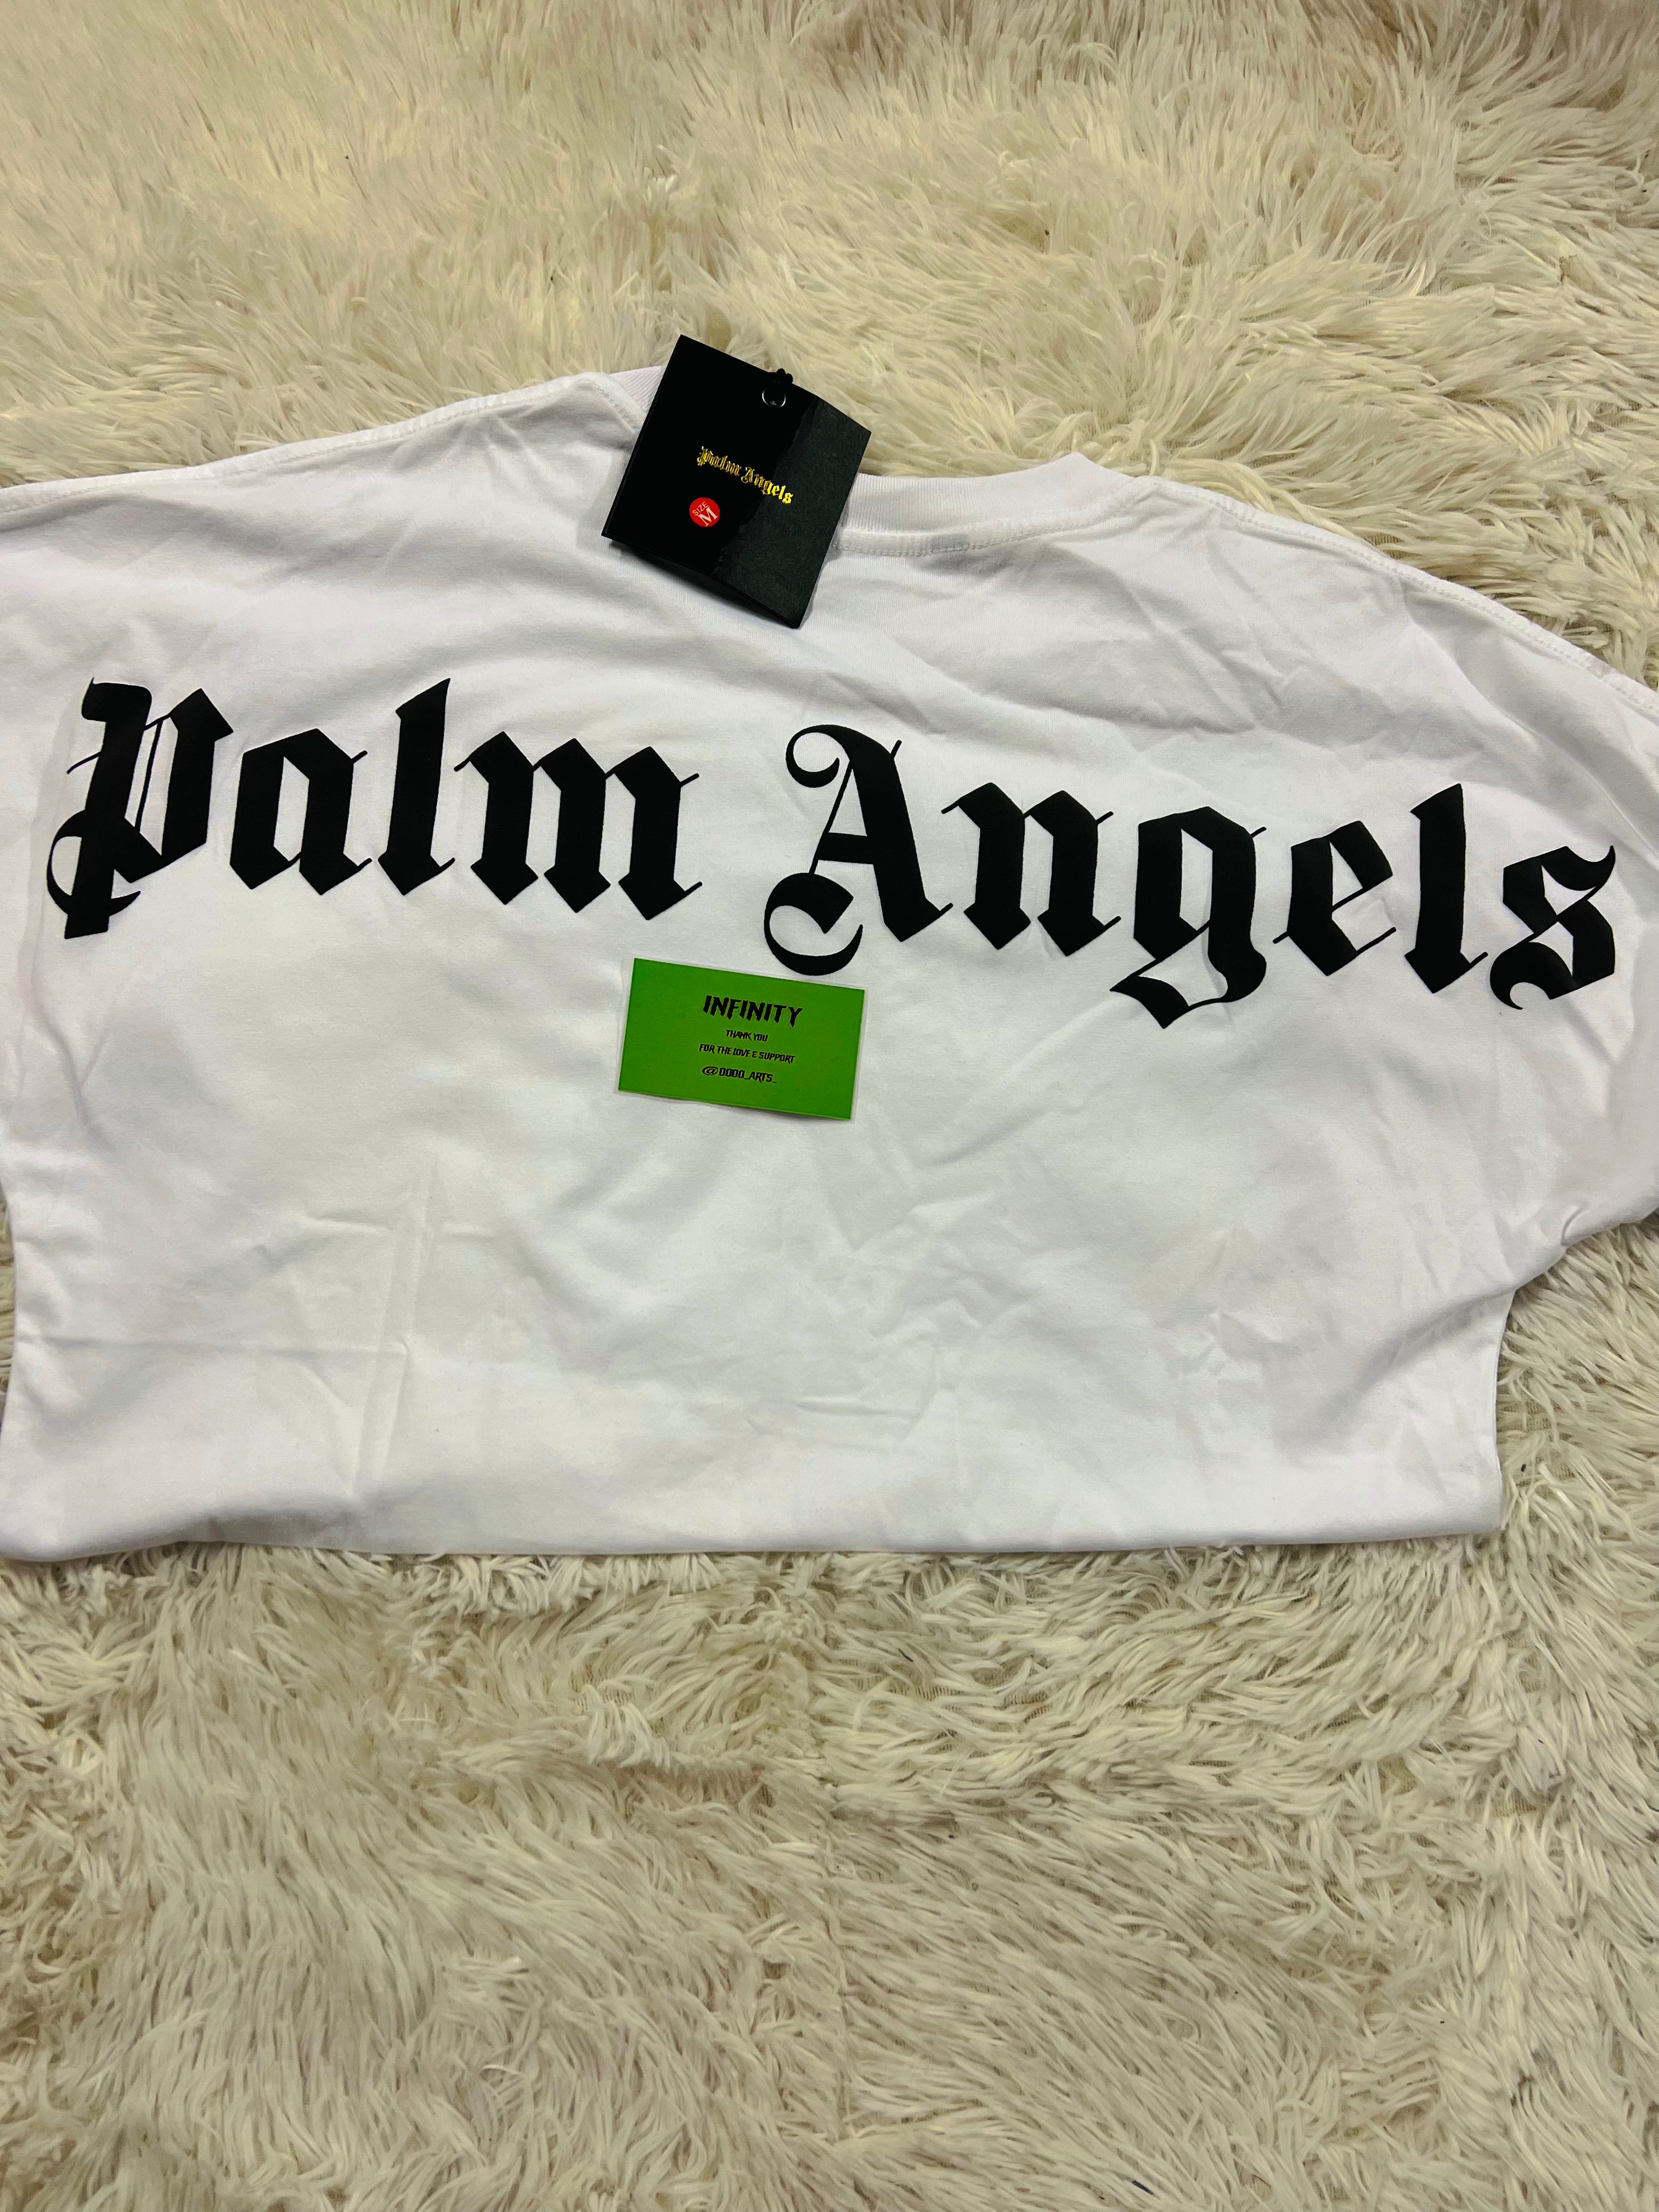 Palm Angels